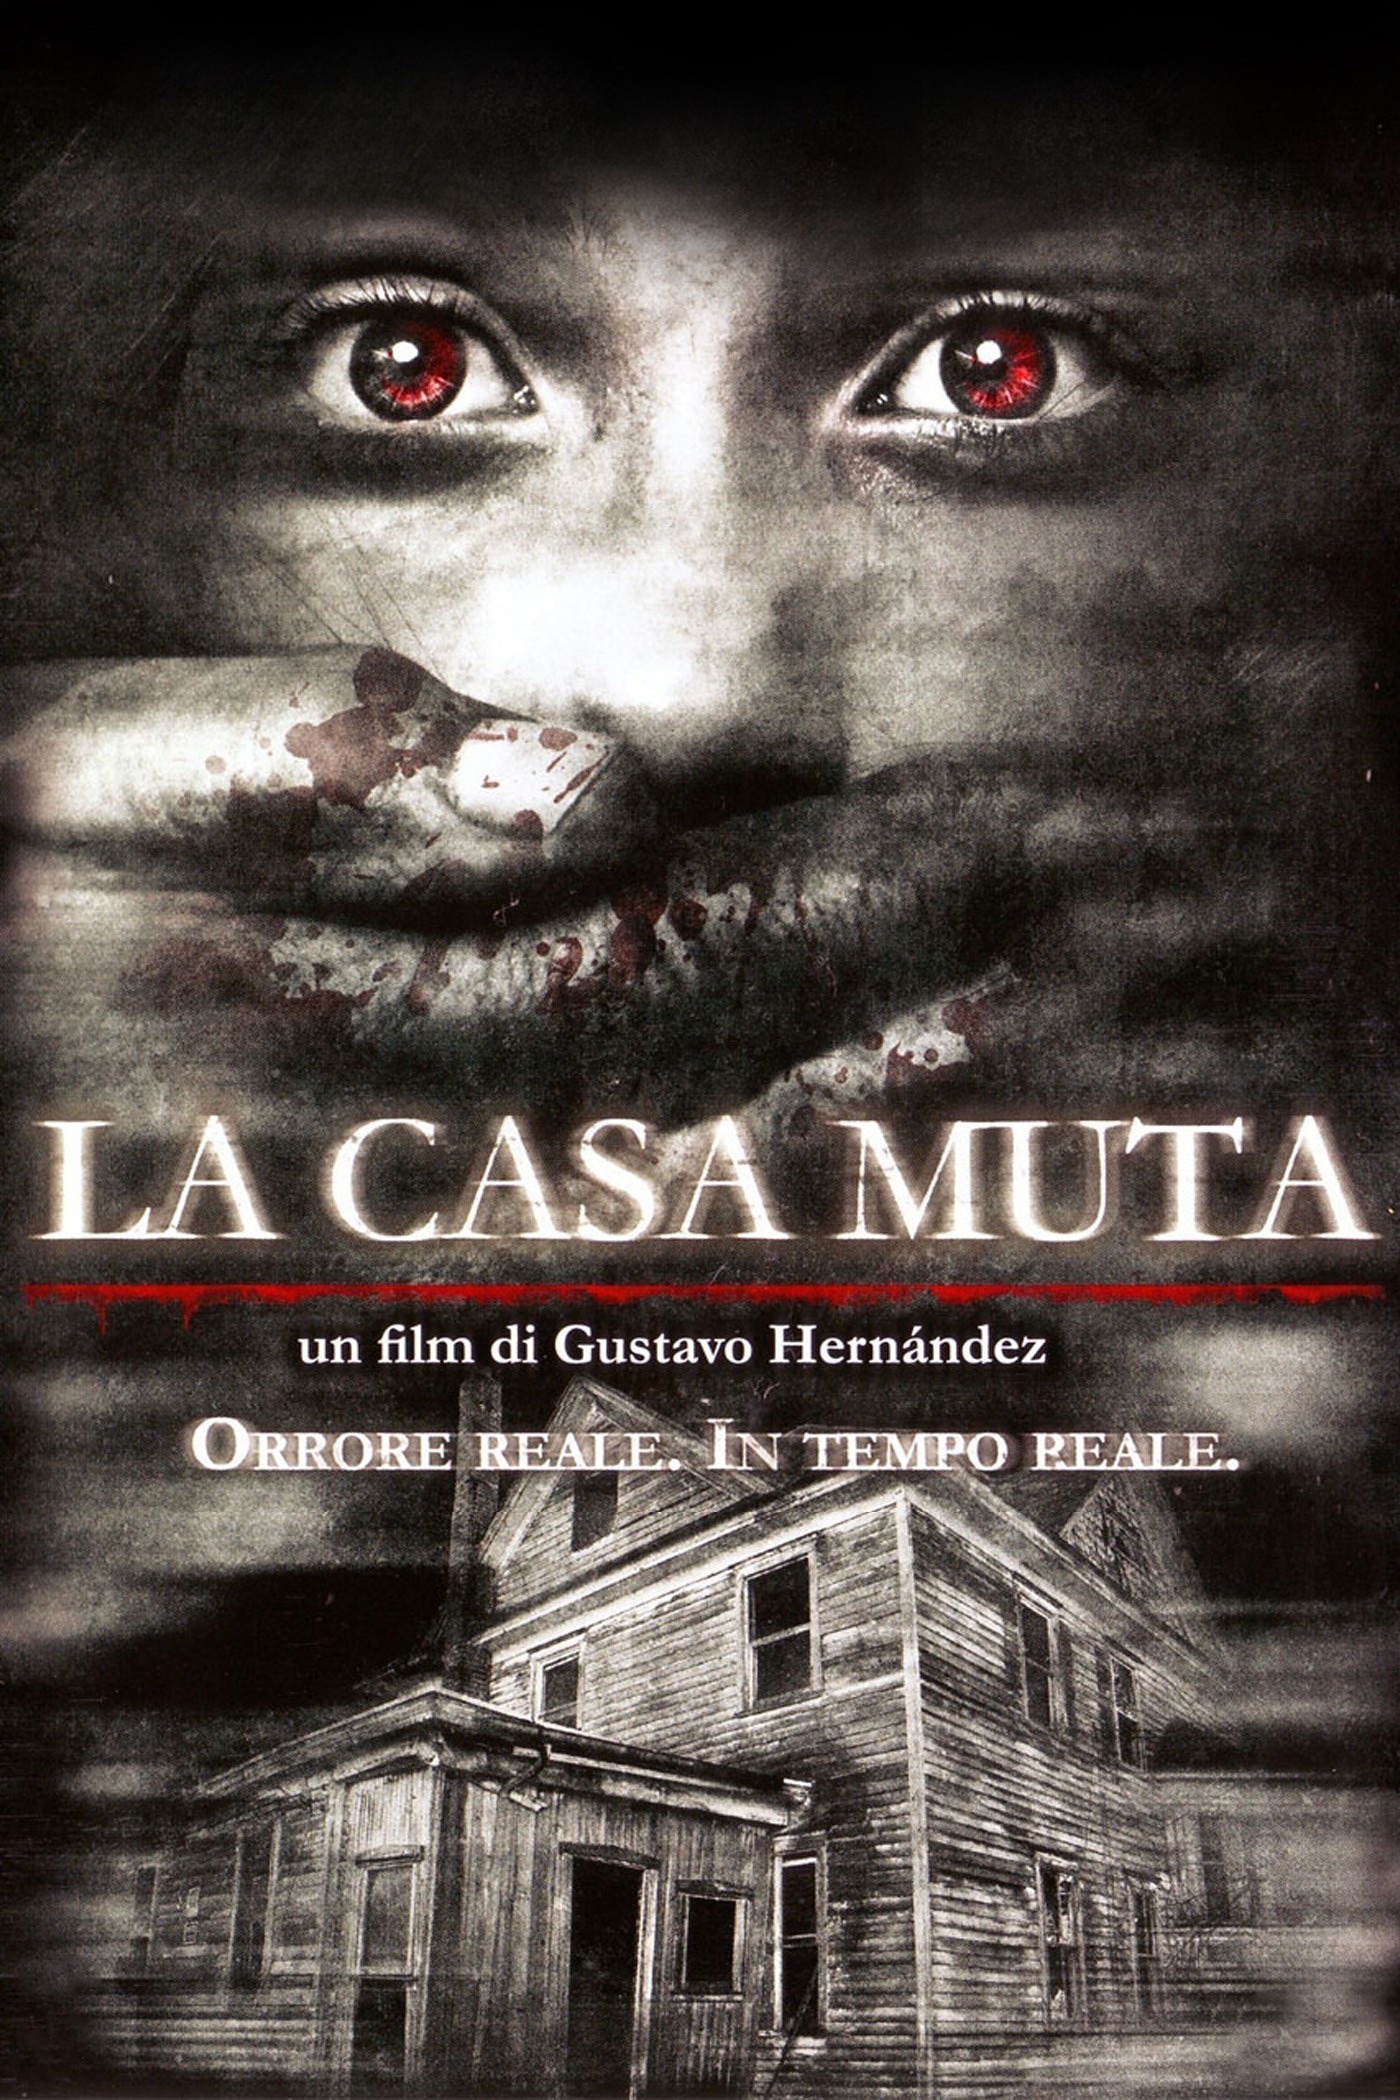 La casa muta [HD] (2011)